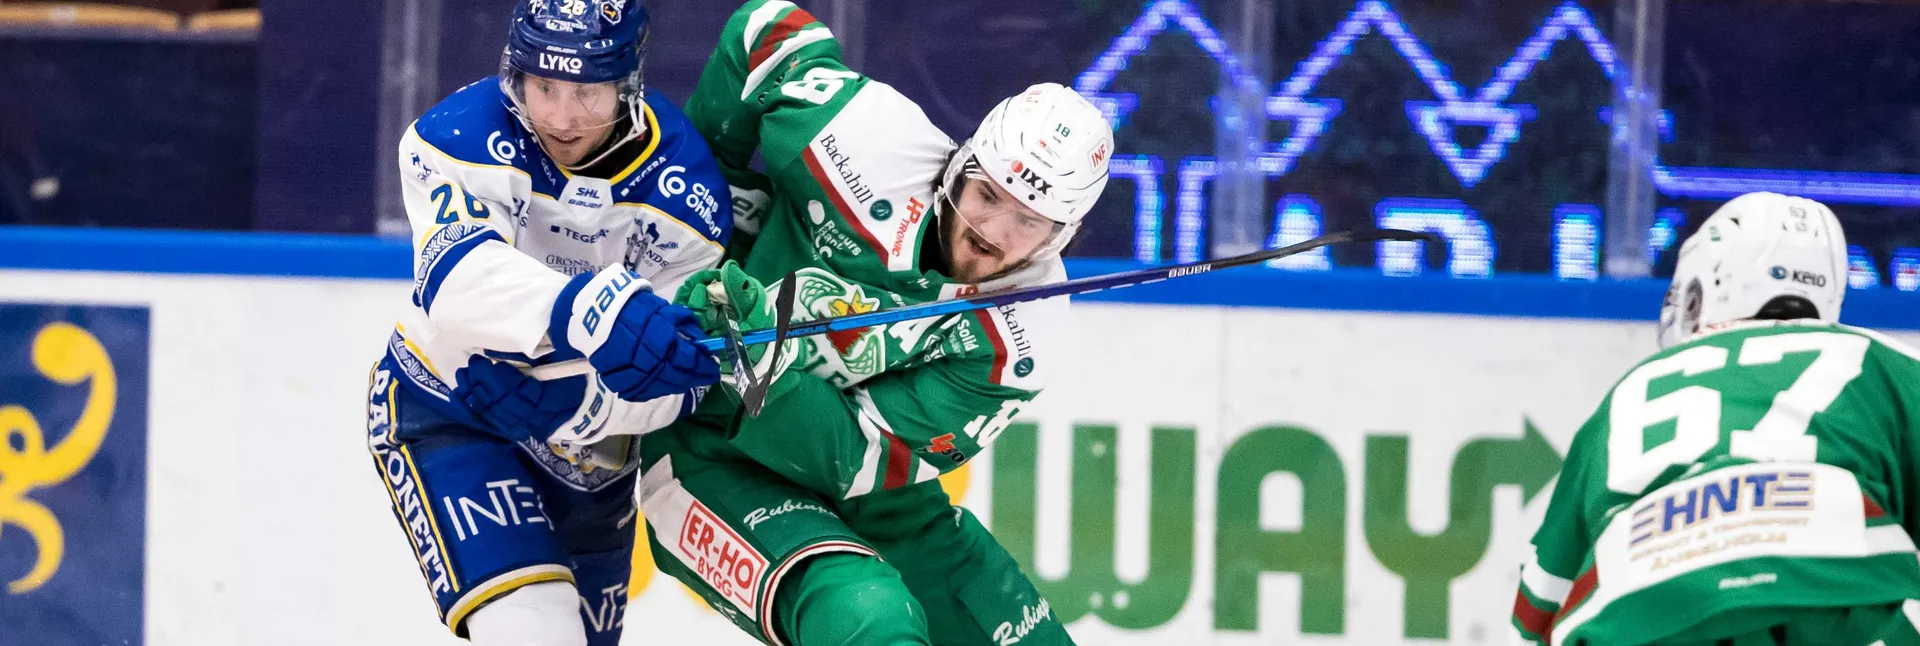 Ishockeymatch mellan Leksand och Rögle i SHL